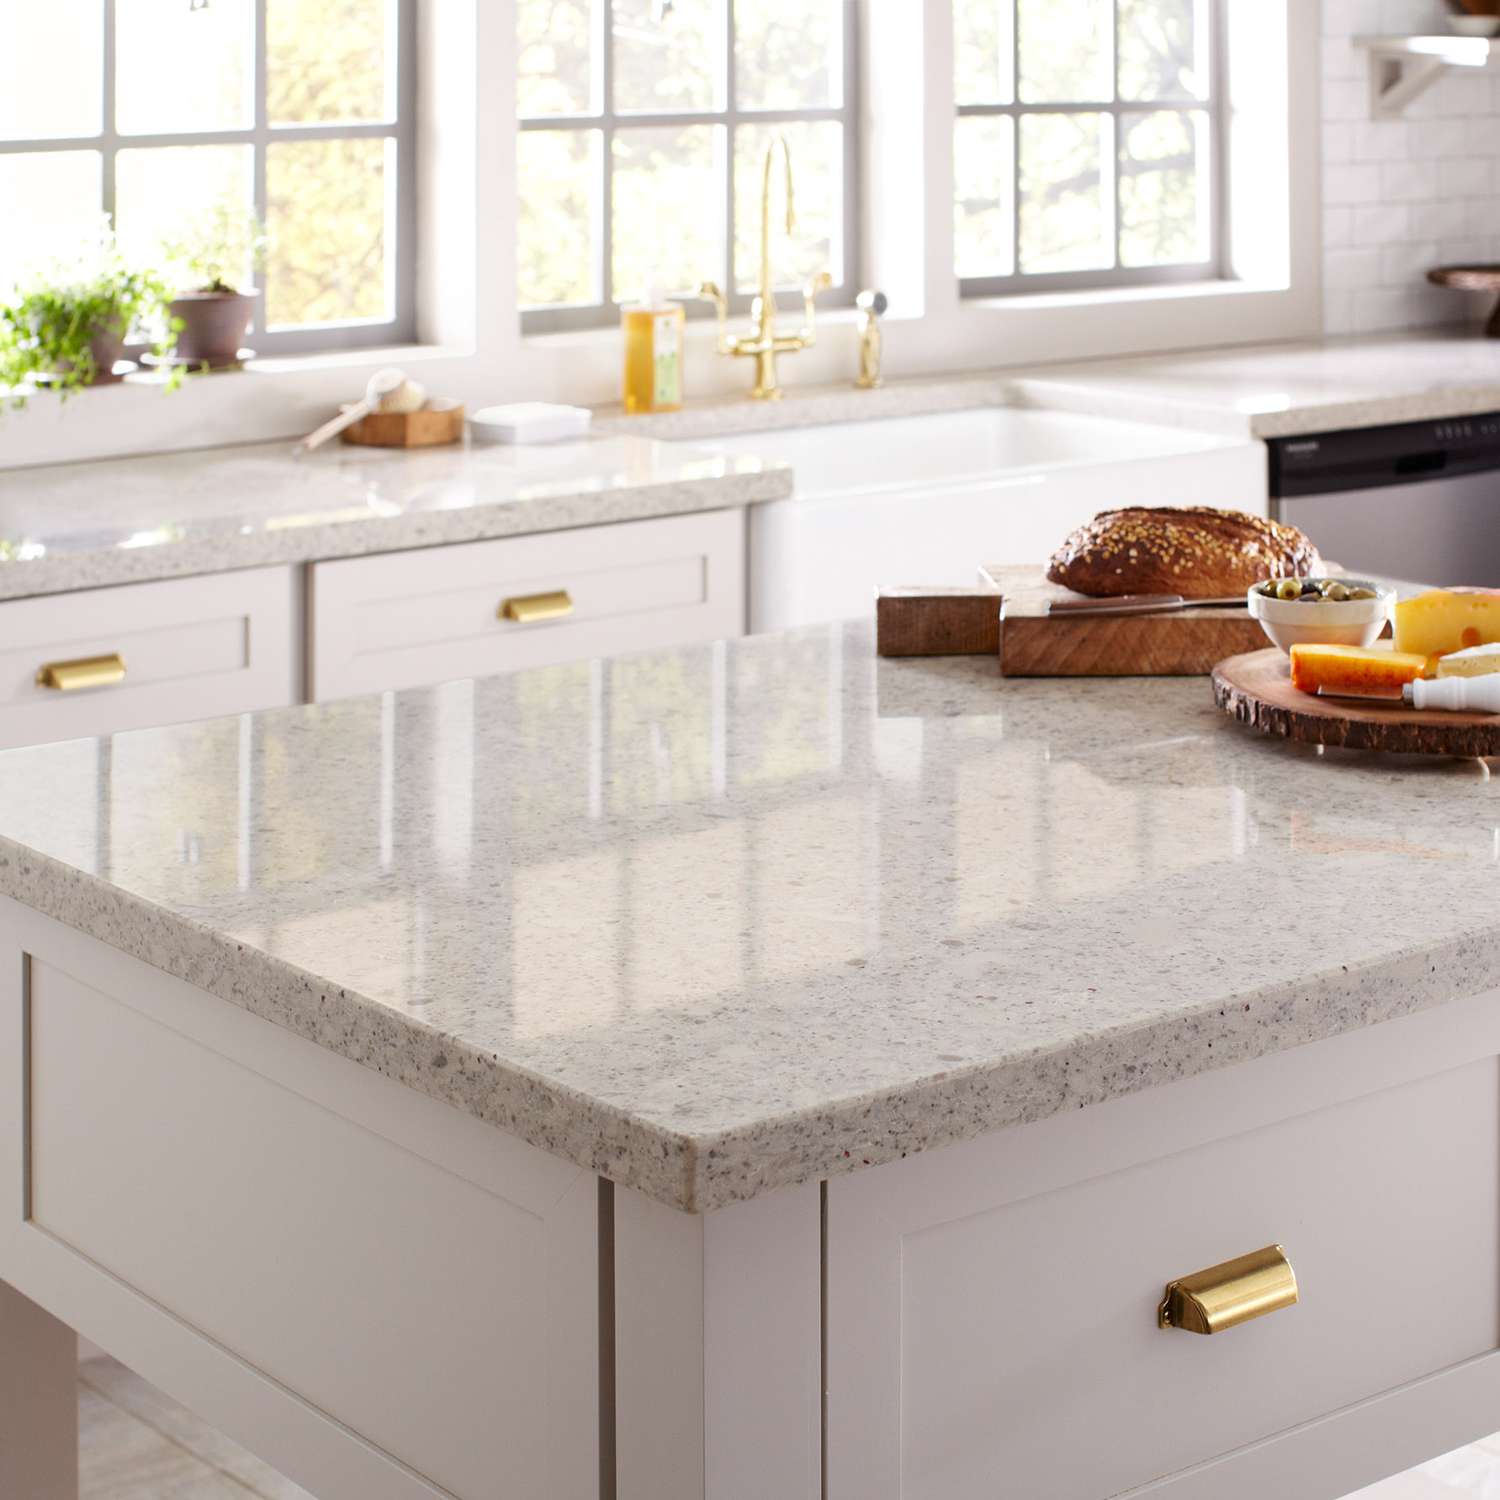 How To Choose Between Quartz Or Granite Kitchen Countertops Martha Stewart